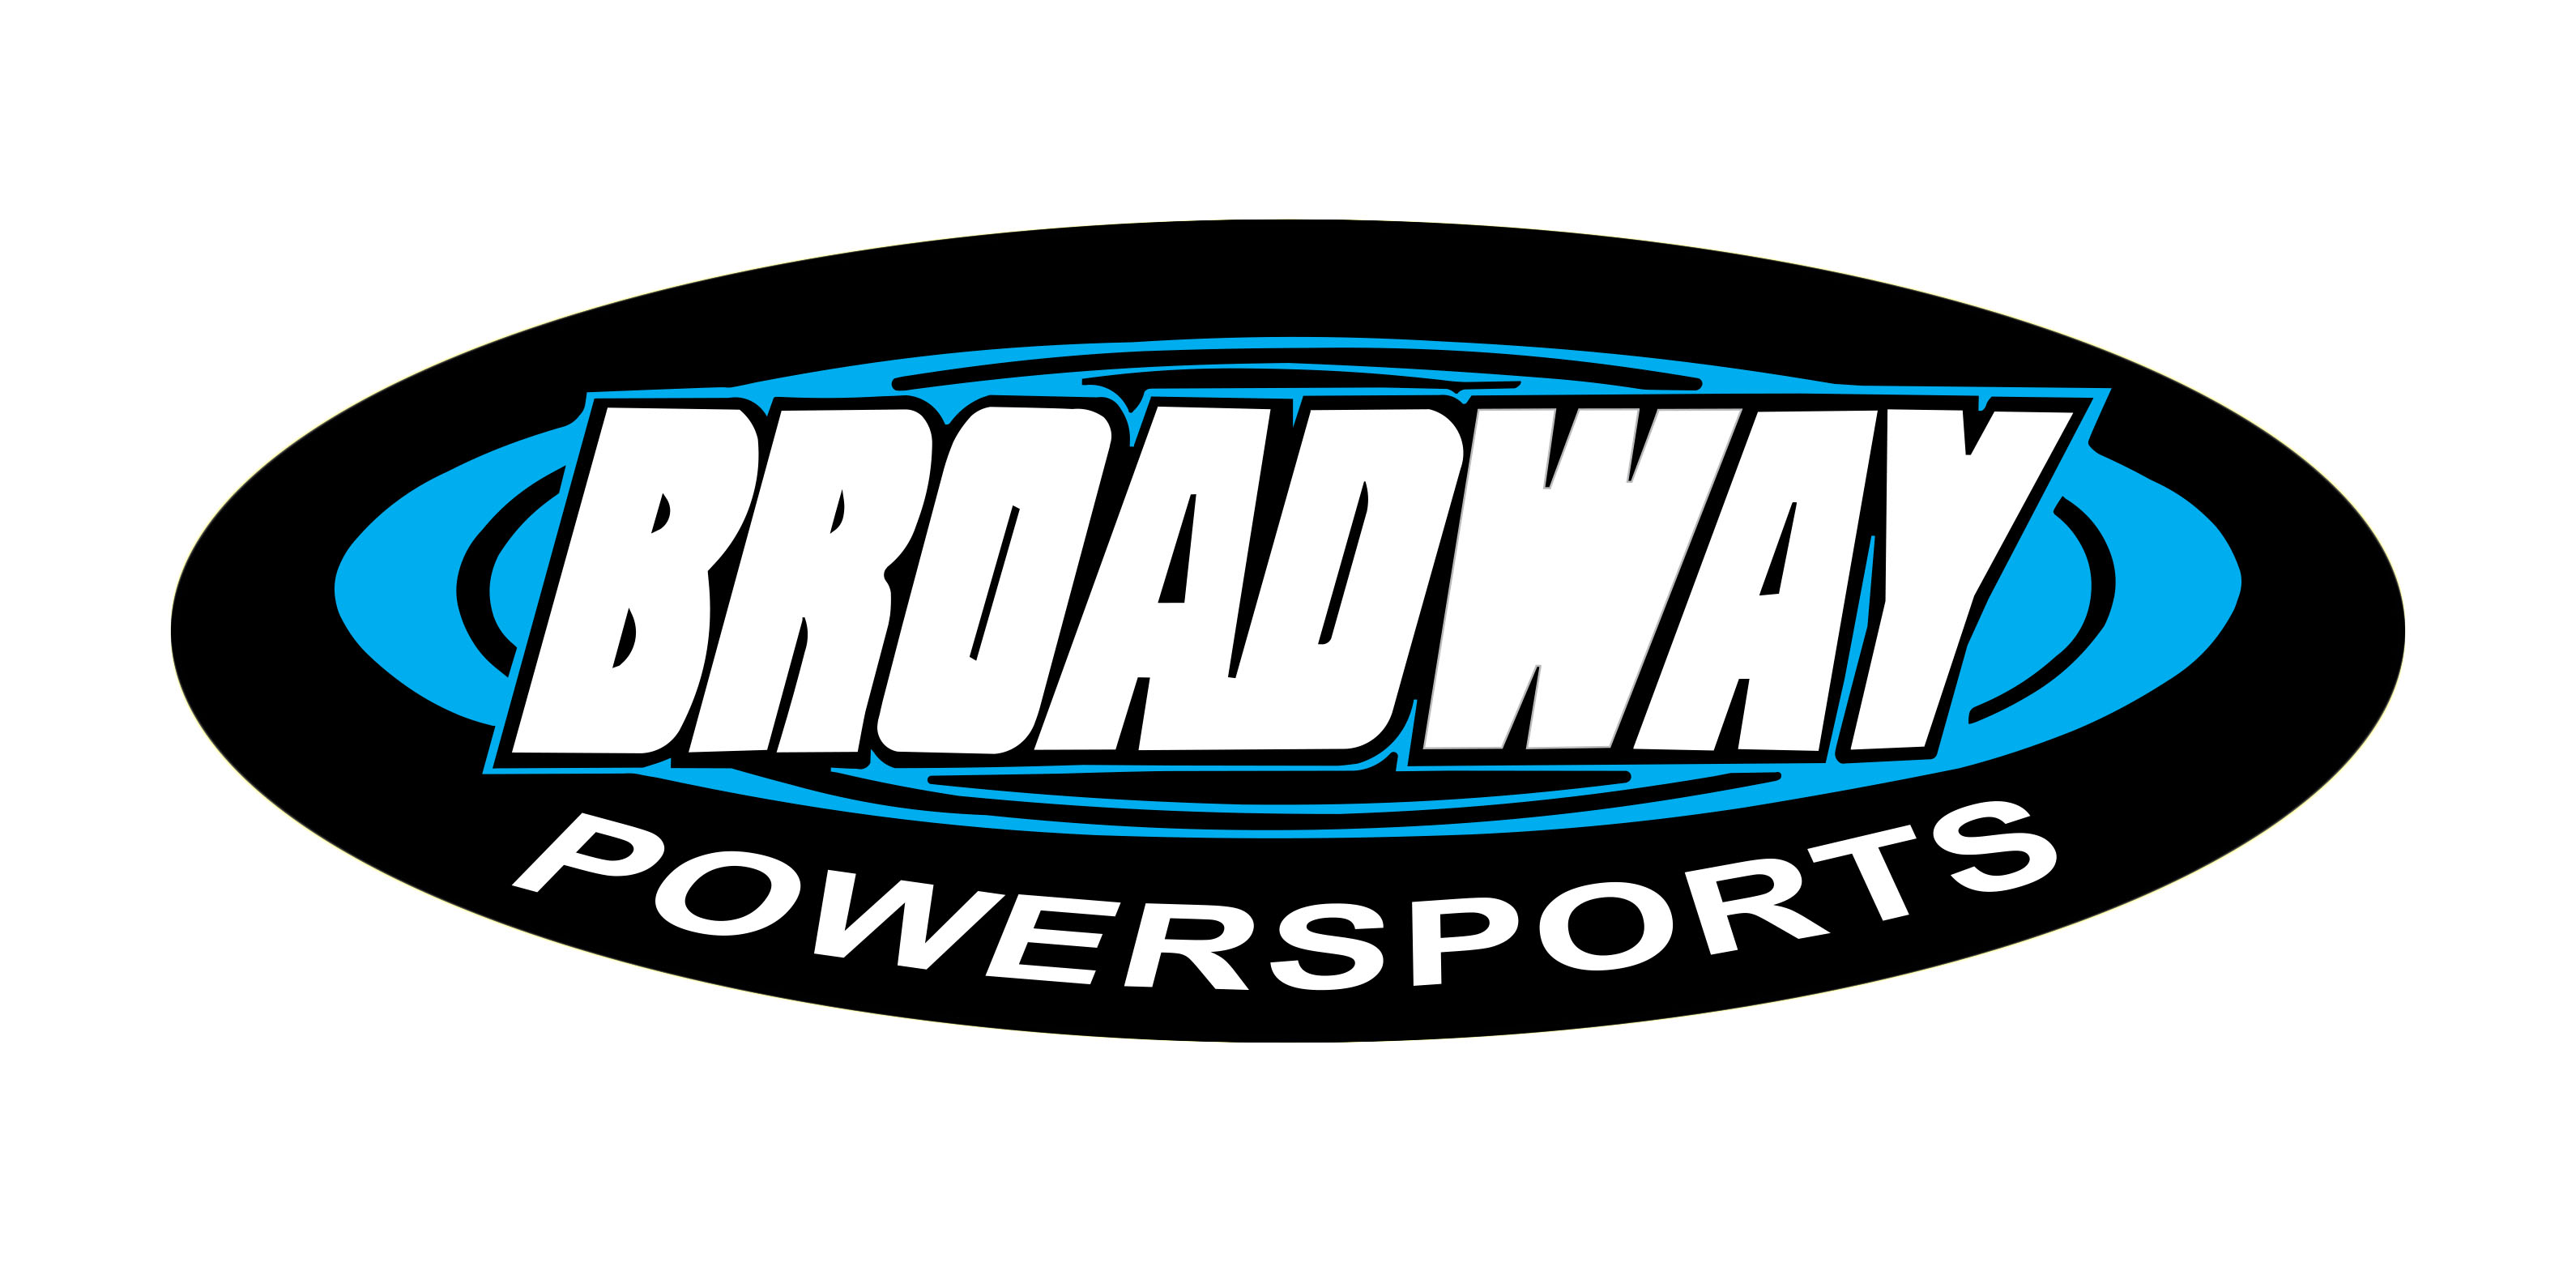 Broadway Powersports